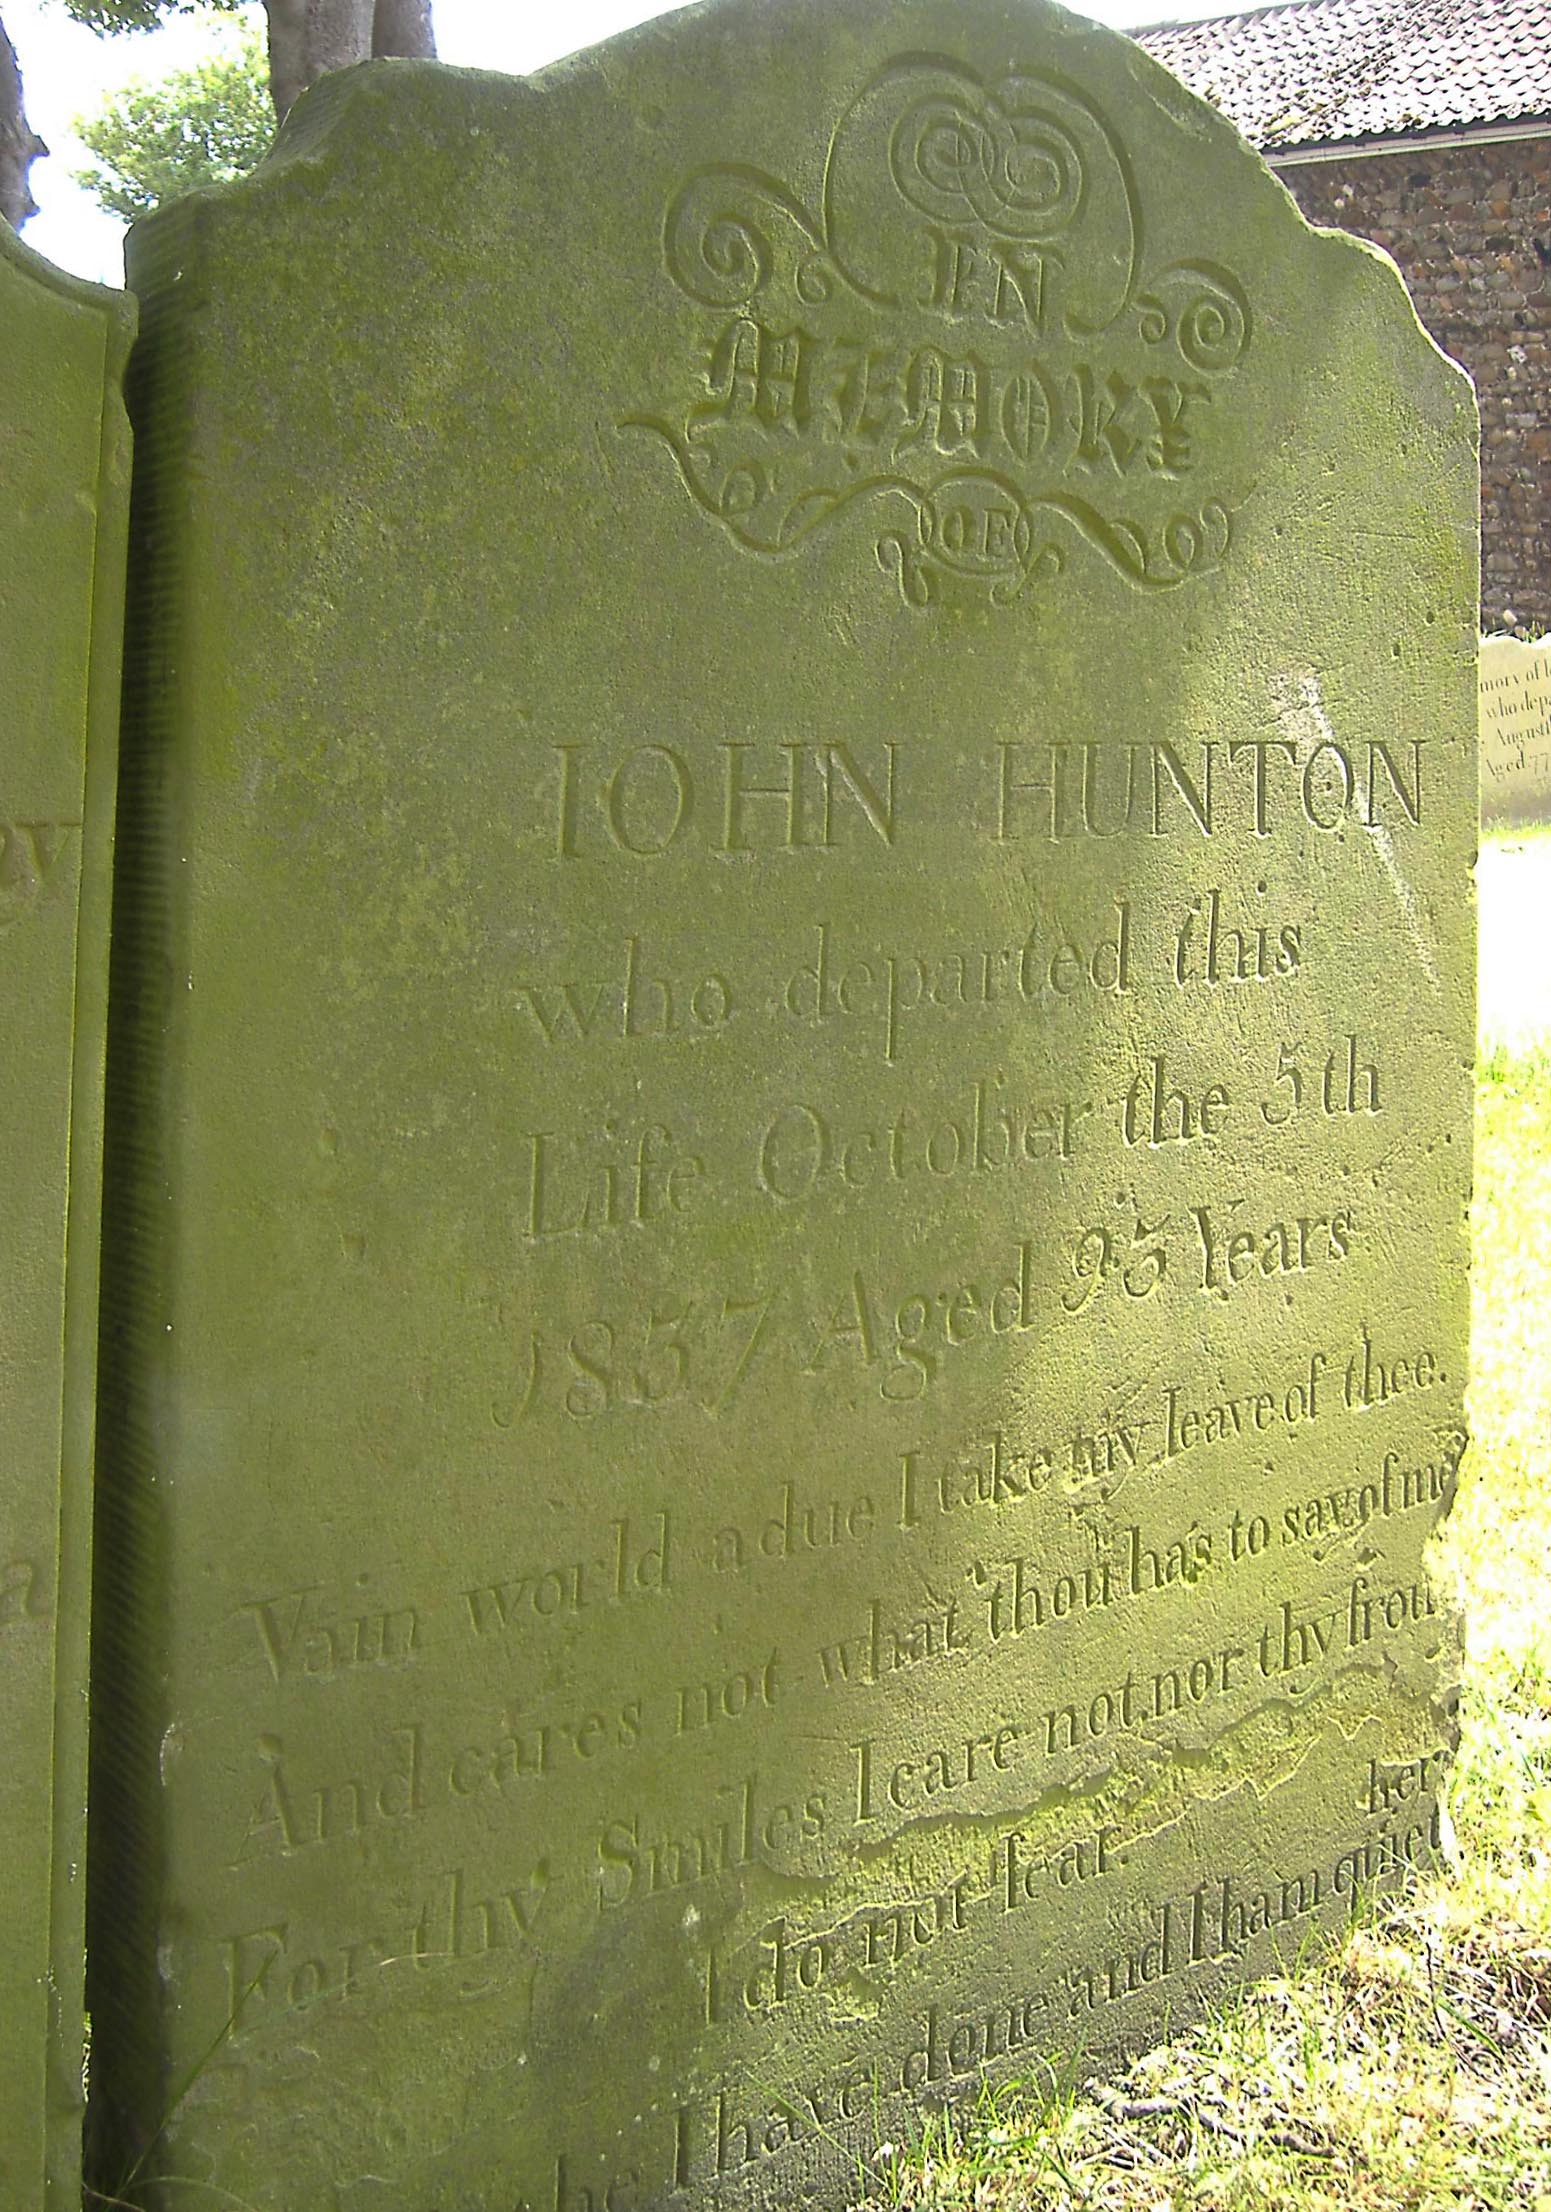 The gravestone of 93 (95?) years old John Hunton of Kilnsea